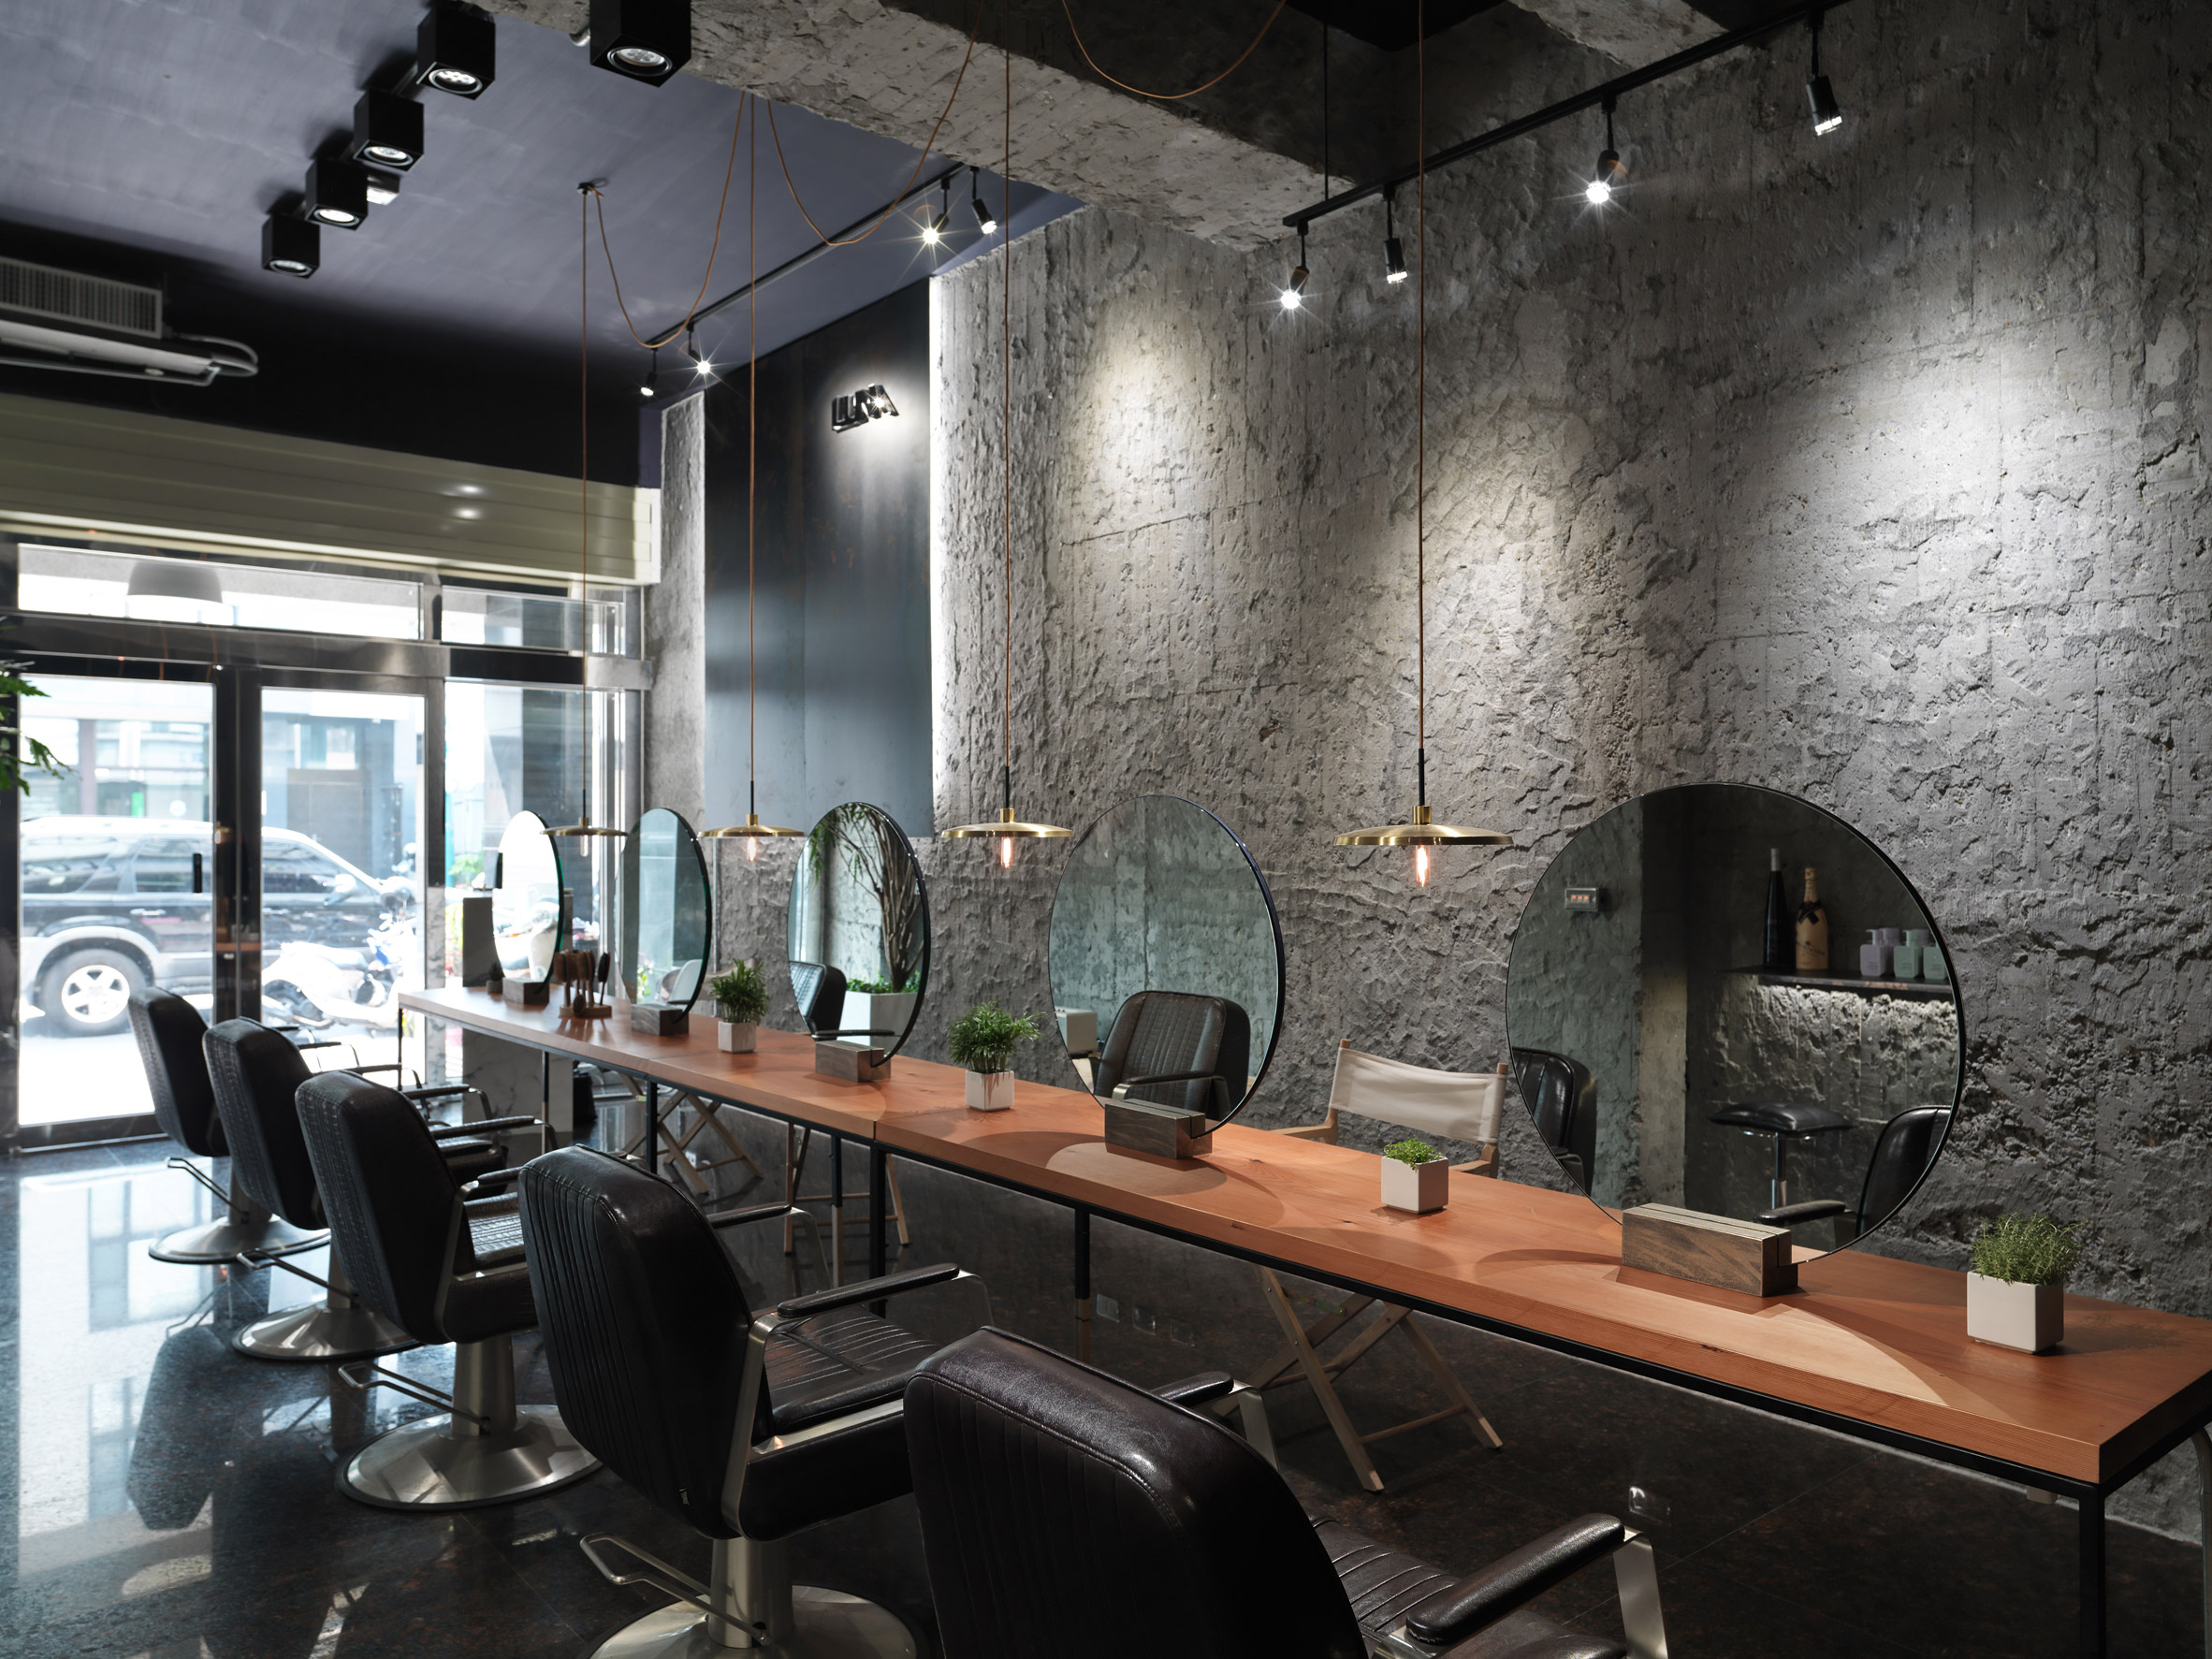 luna-salon-soar-design-interiors-changhua-taiwan_dezeen_2364_col_4